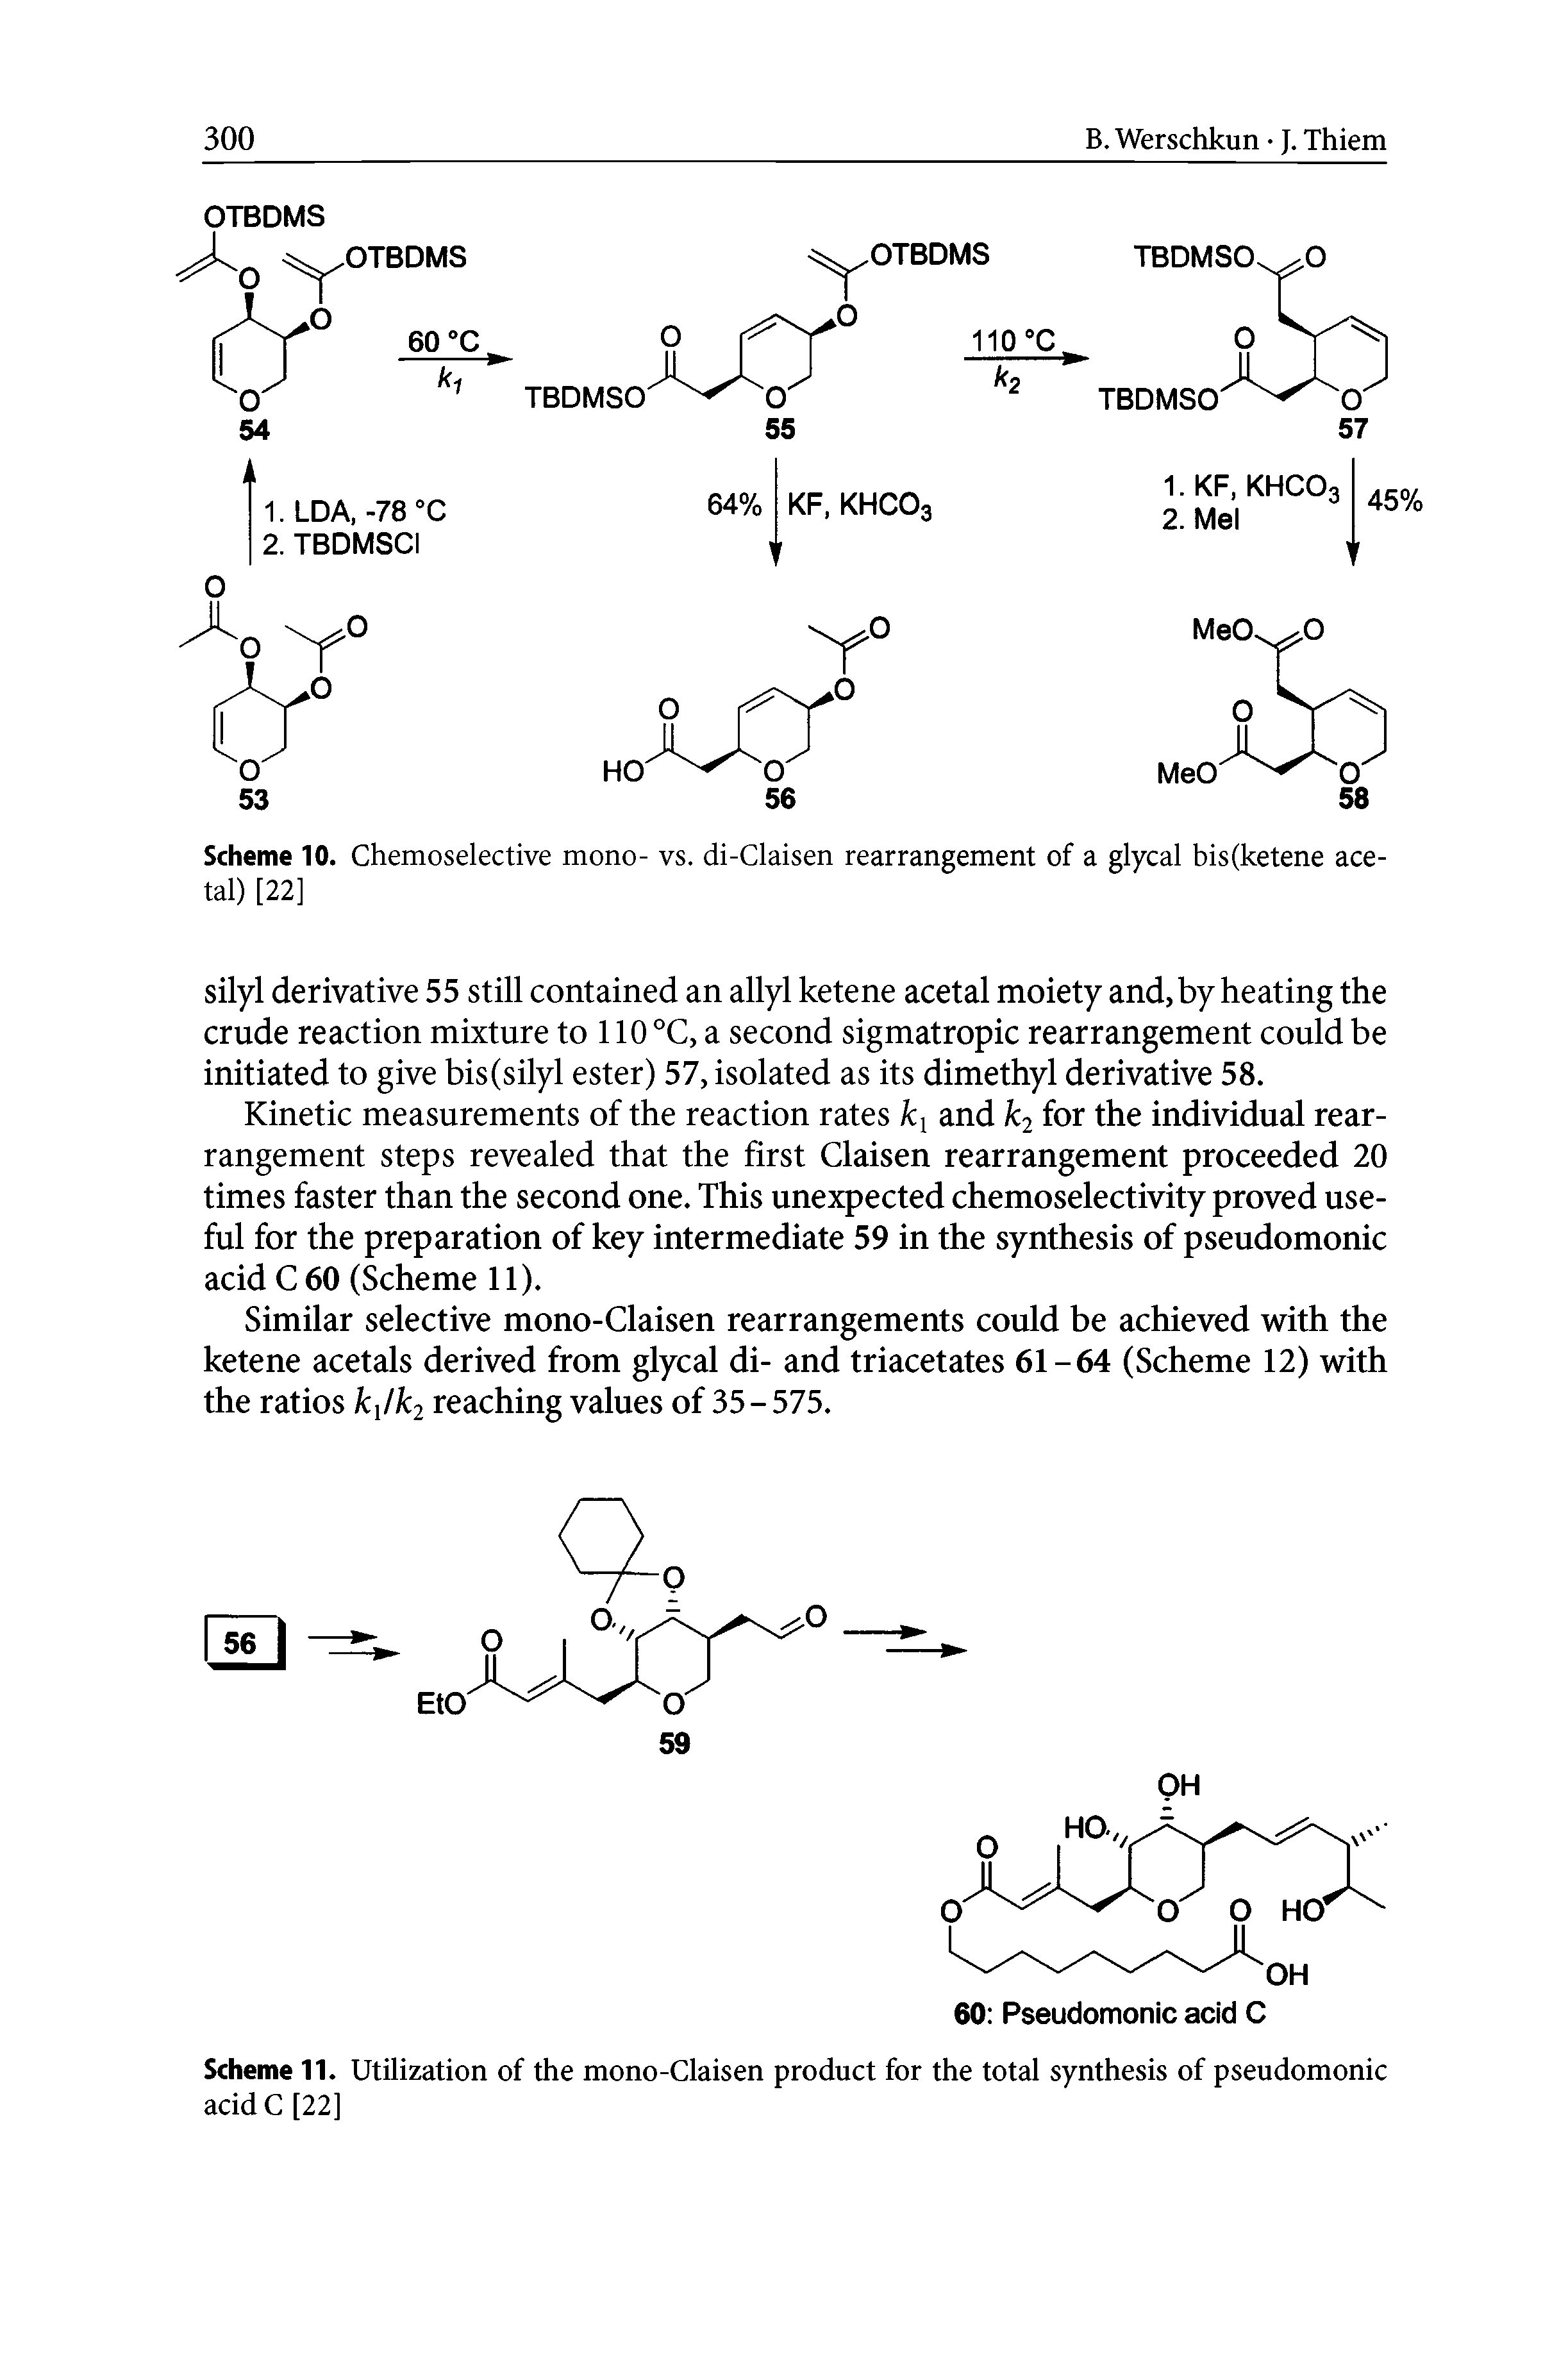 Scheme 10. Chemoselective mono- vs. di-Claisen rearrangement of a glycal bis(ketene acetal) [22]...